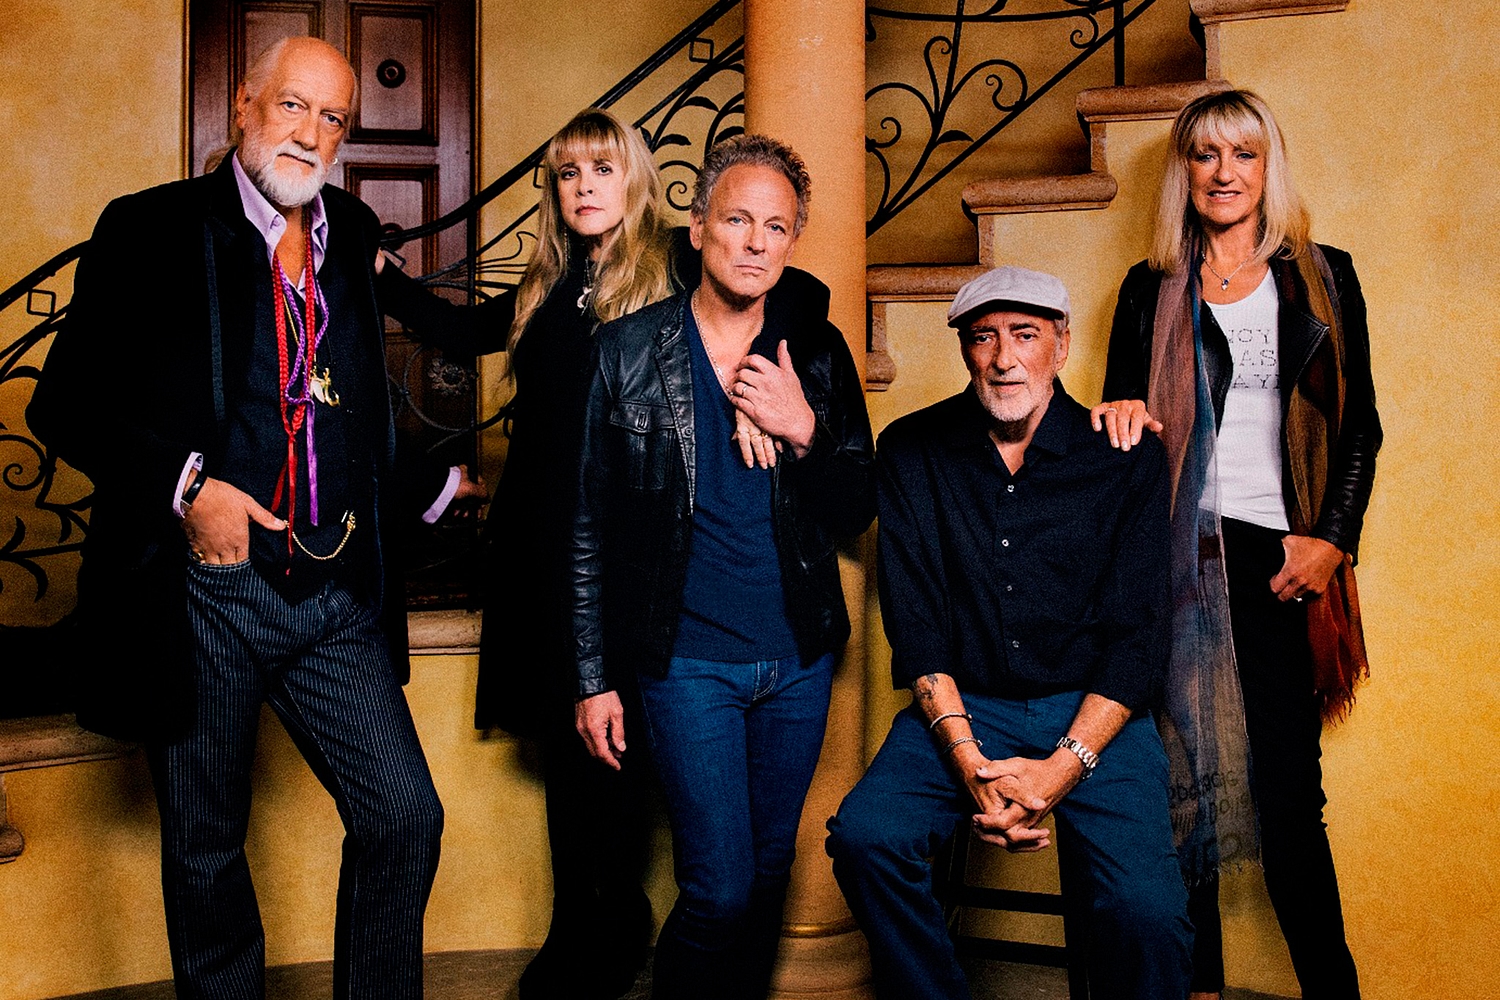 Isle of Wight organiser: “Michael Eavis said, ‘How did you get Fleetwood Mac?’ I said, I paid them!”